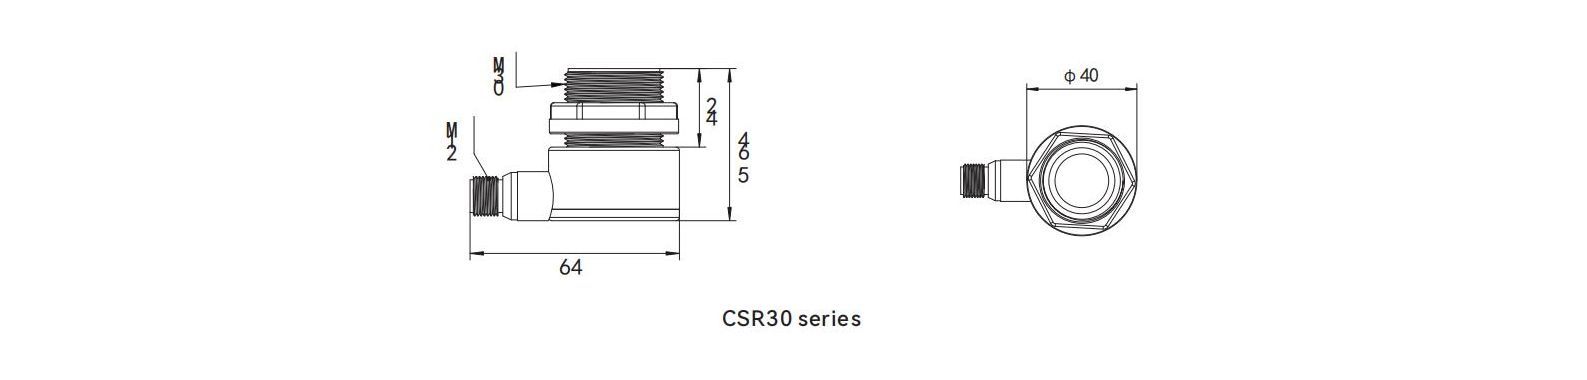 Dimensions of ultrasonic level transducer CSR30 series